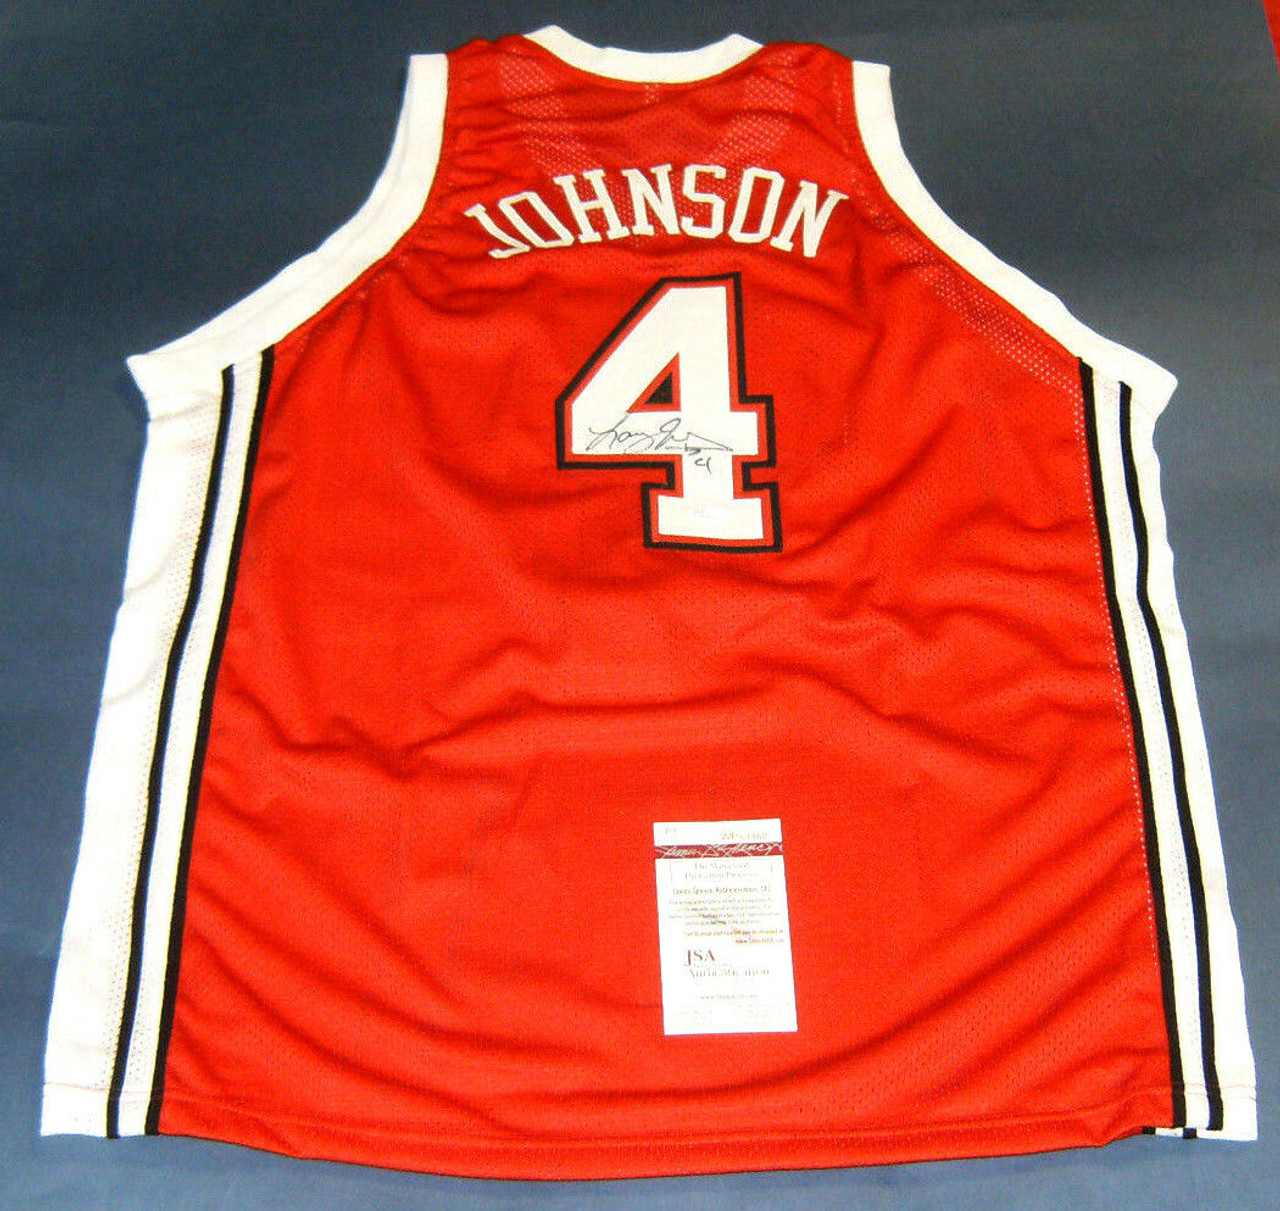 Erik Johnson Jerseys, Erik Johnson Shirt, NHL Erik Johnson Gear &  Merchandise